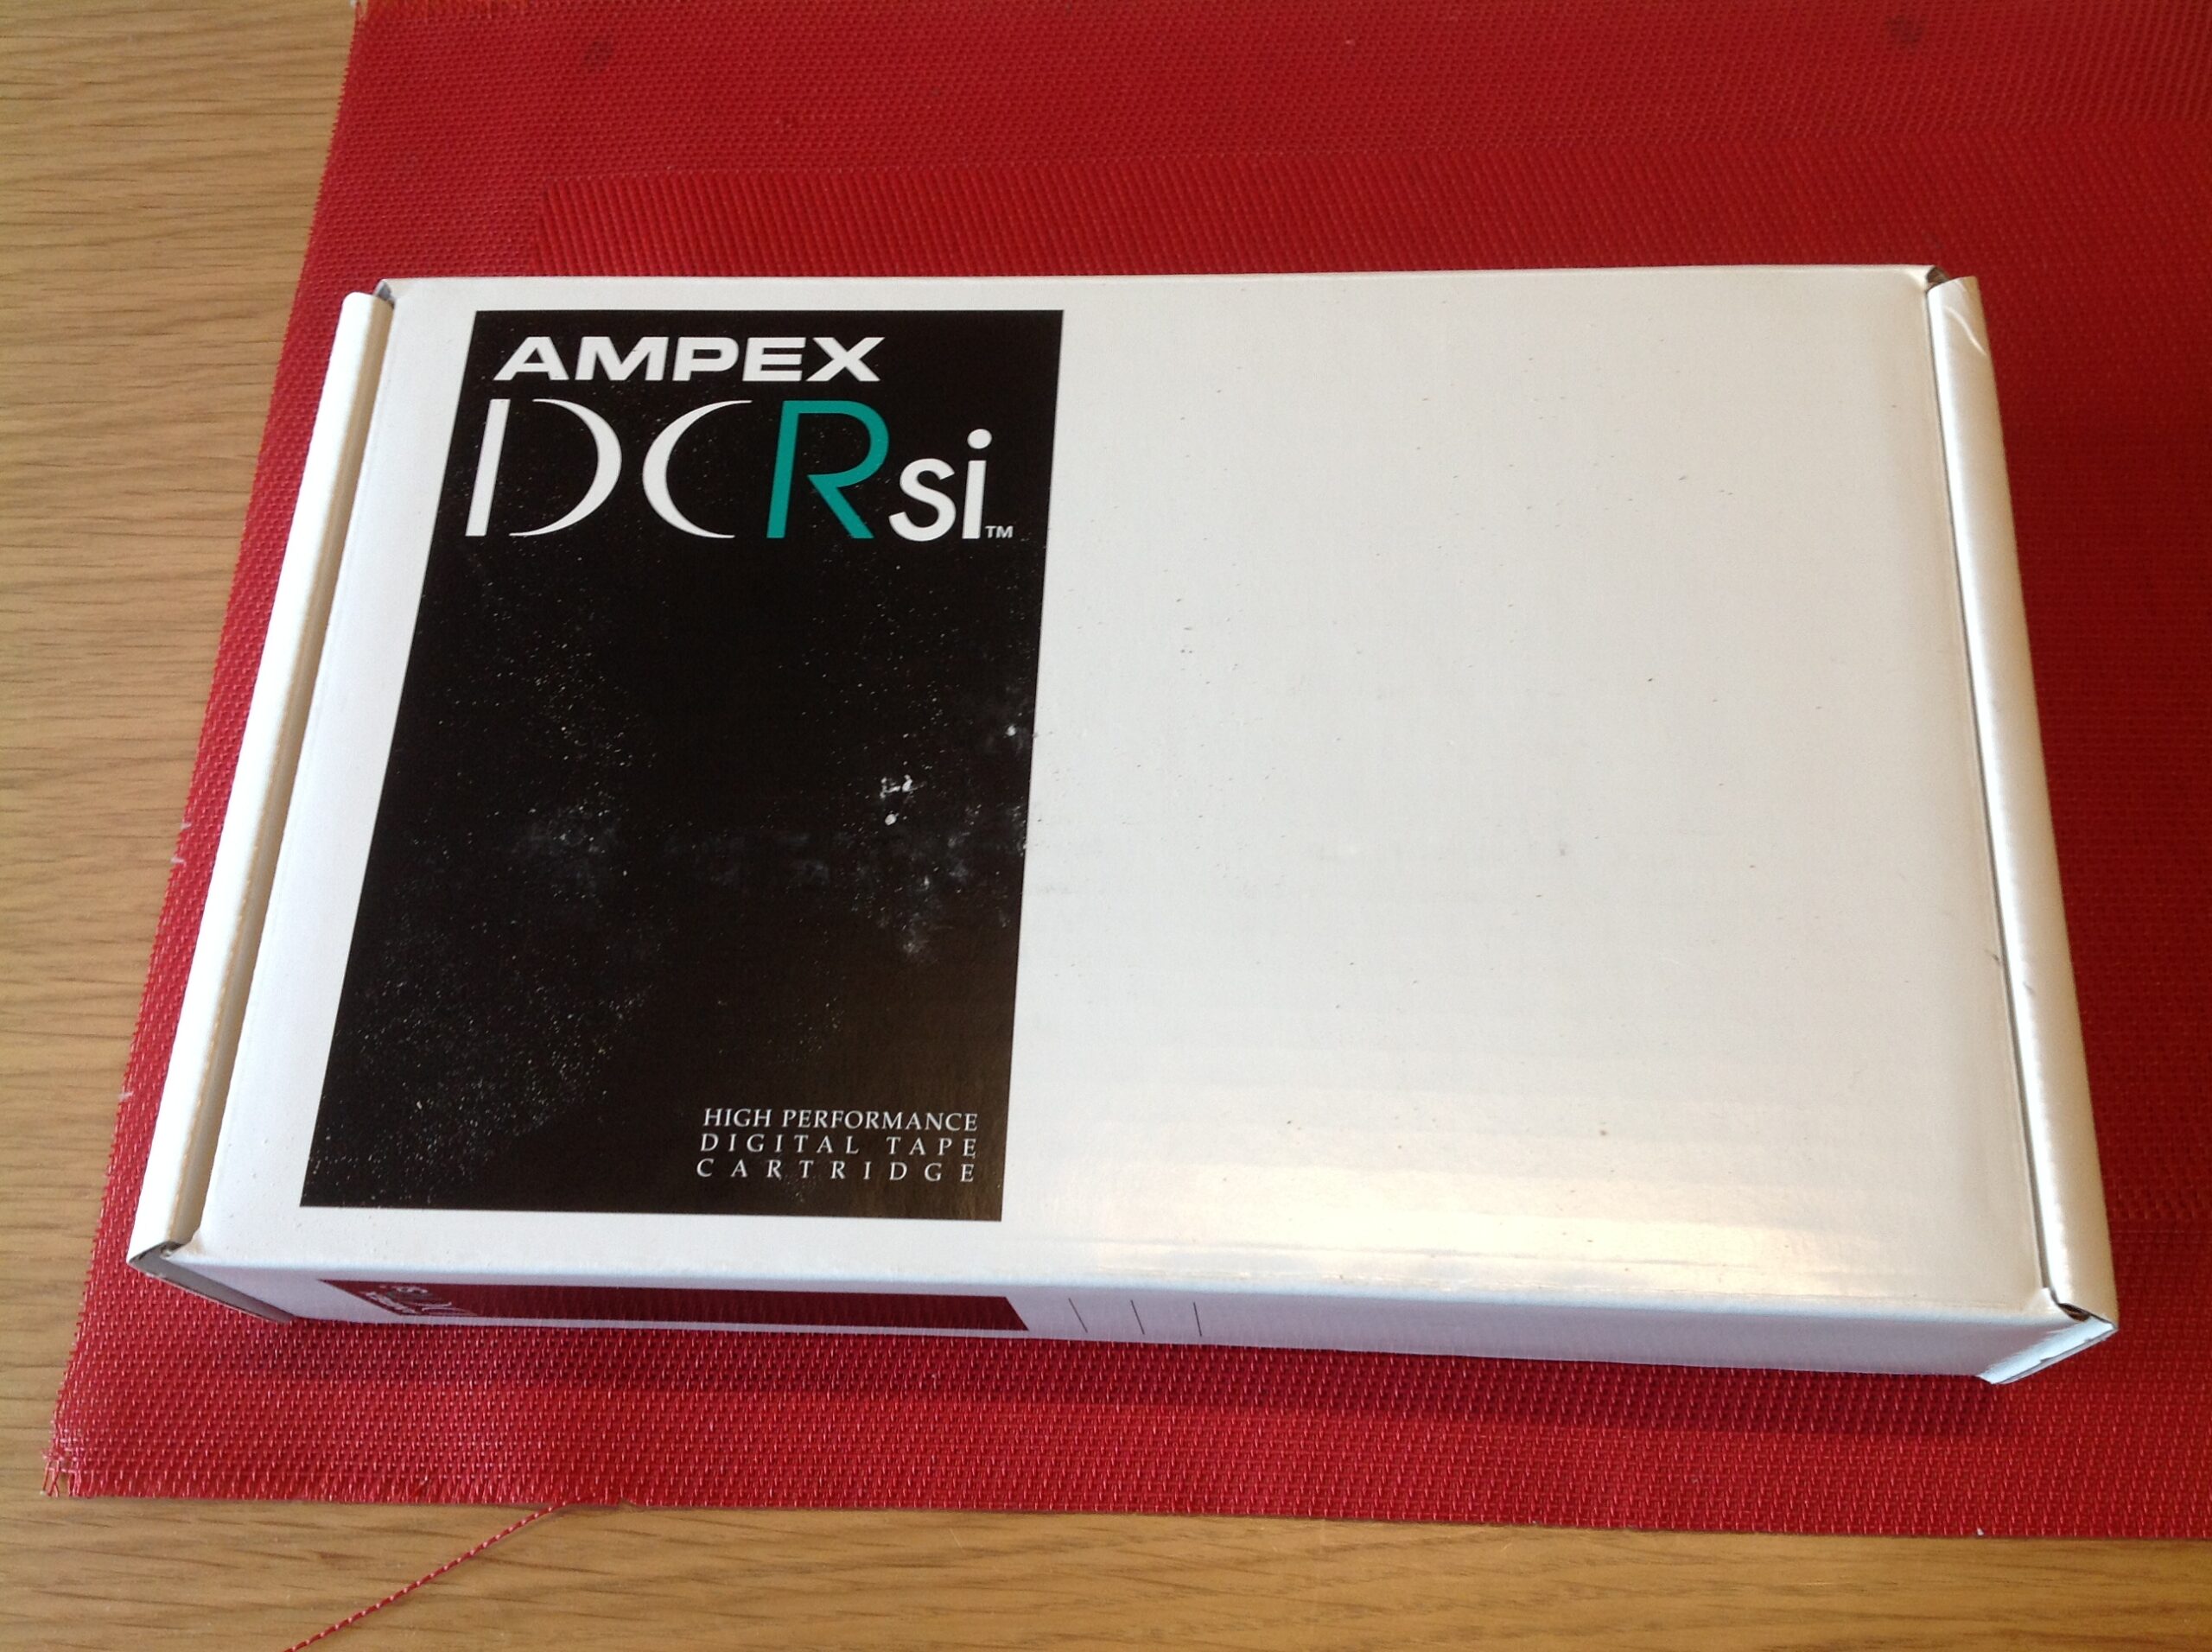 Ampex DCRsi 5003 Digital Tape Cartidge, Digitale Bandkassette